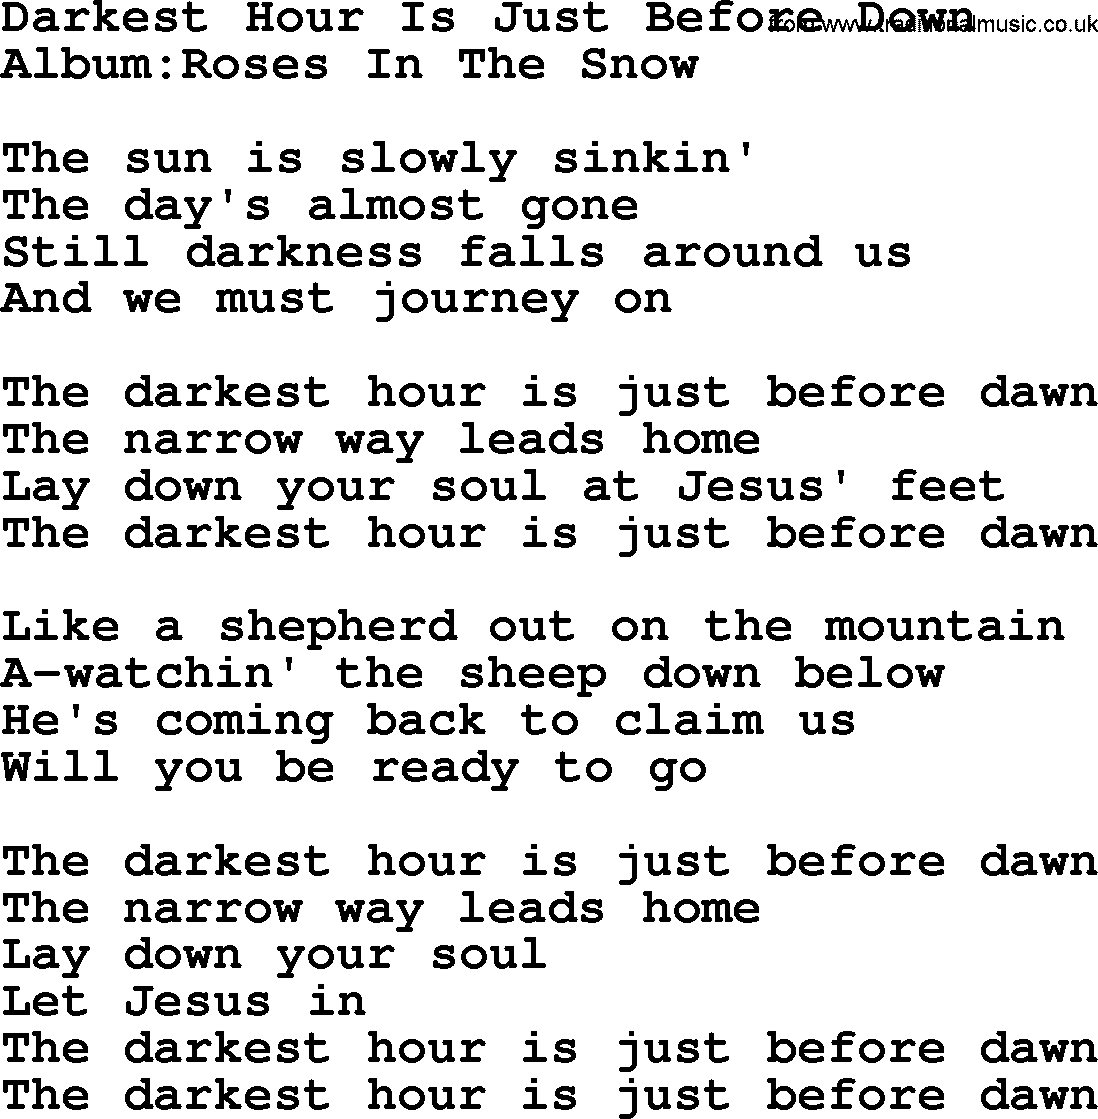 Emmylou Harris song: Darkest Hour Is Just Before Down lyrics